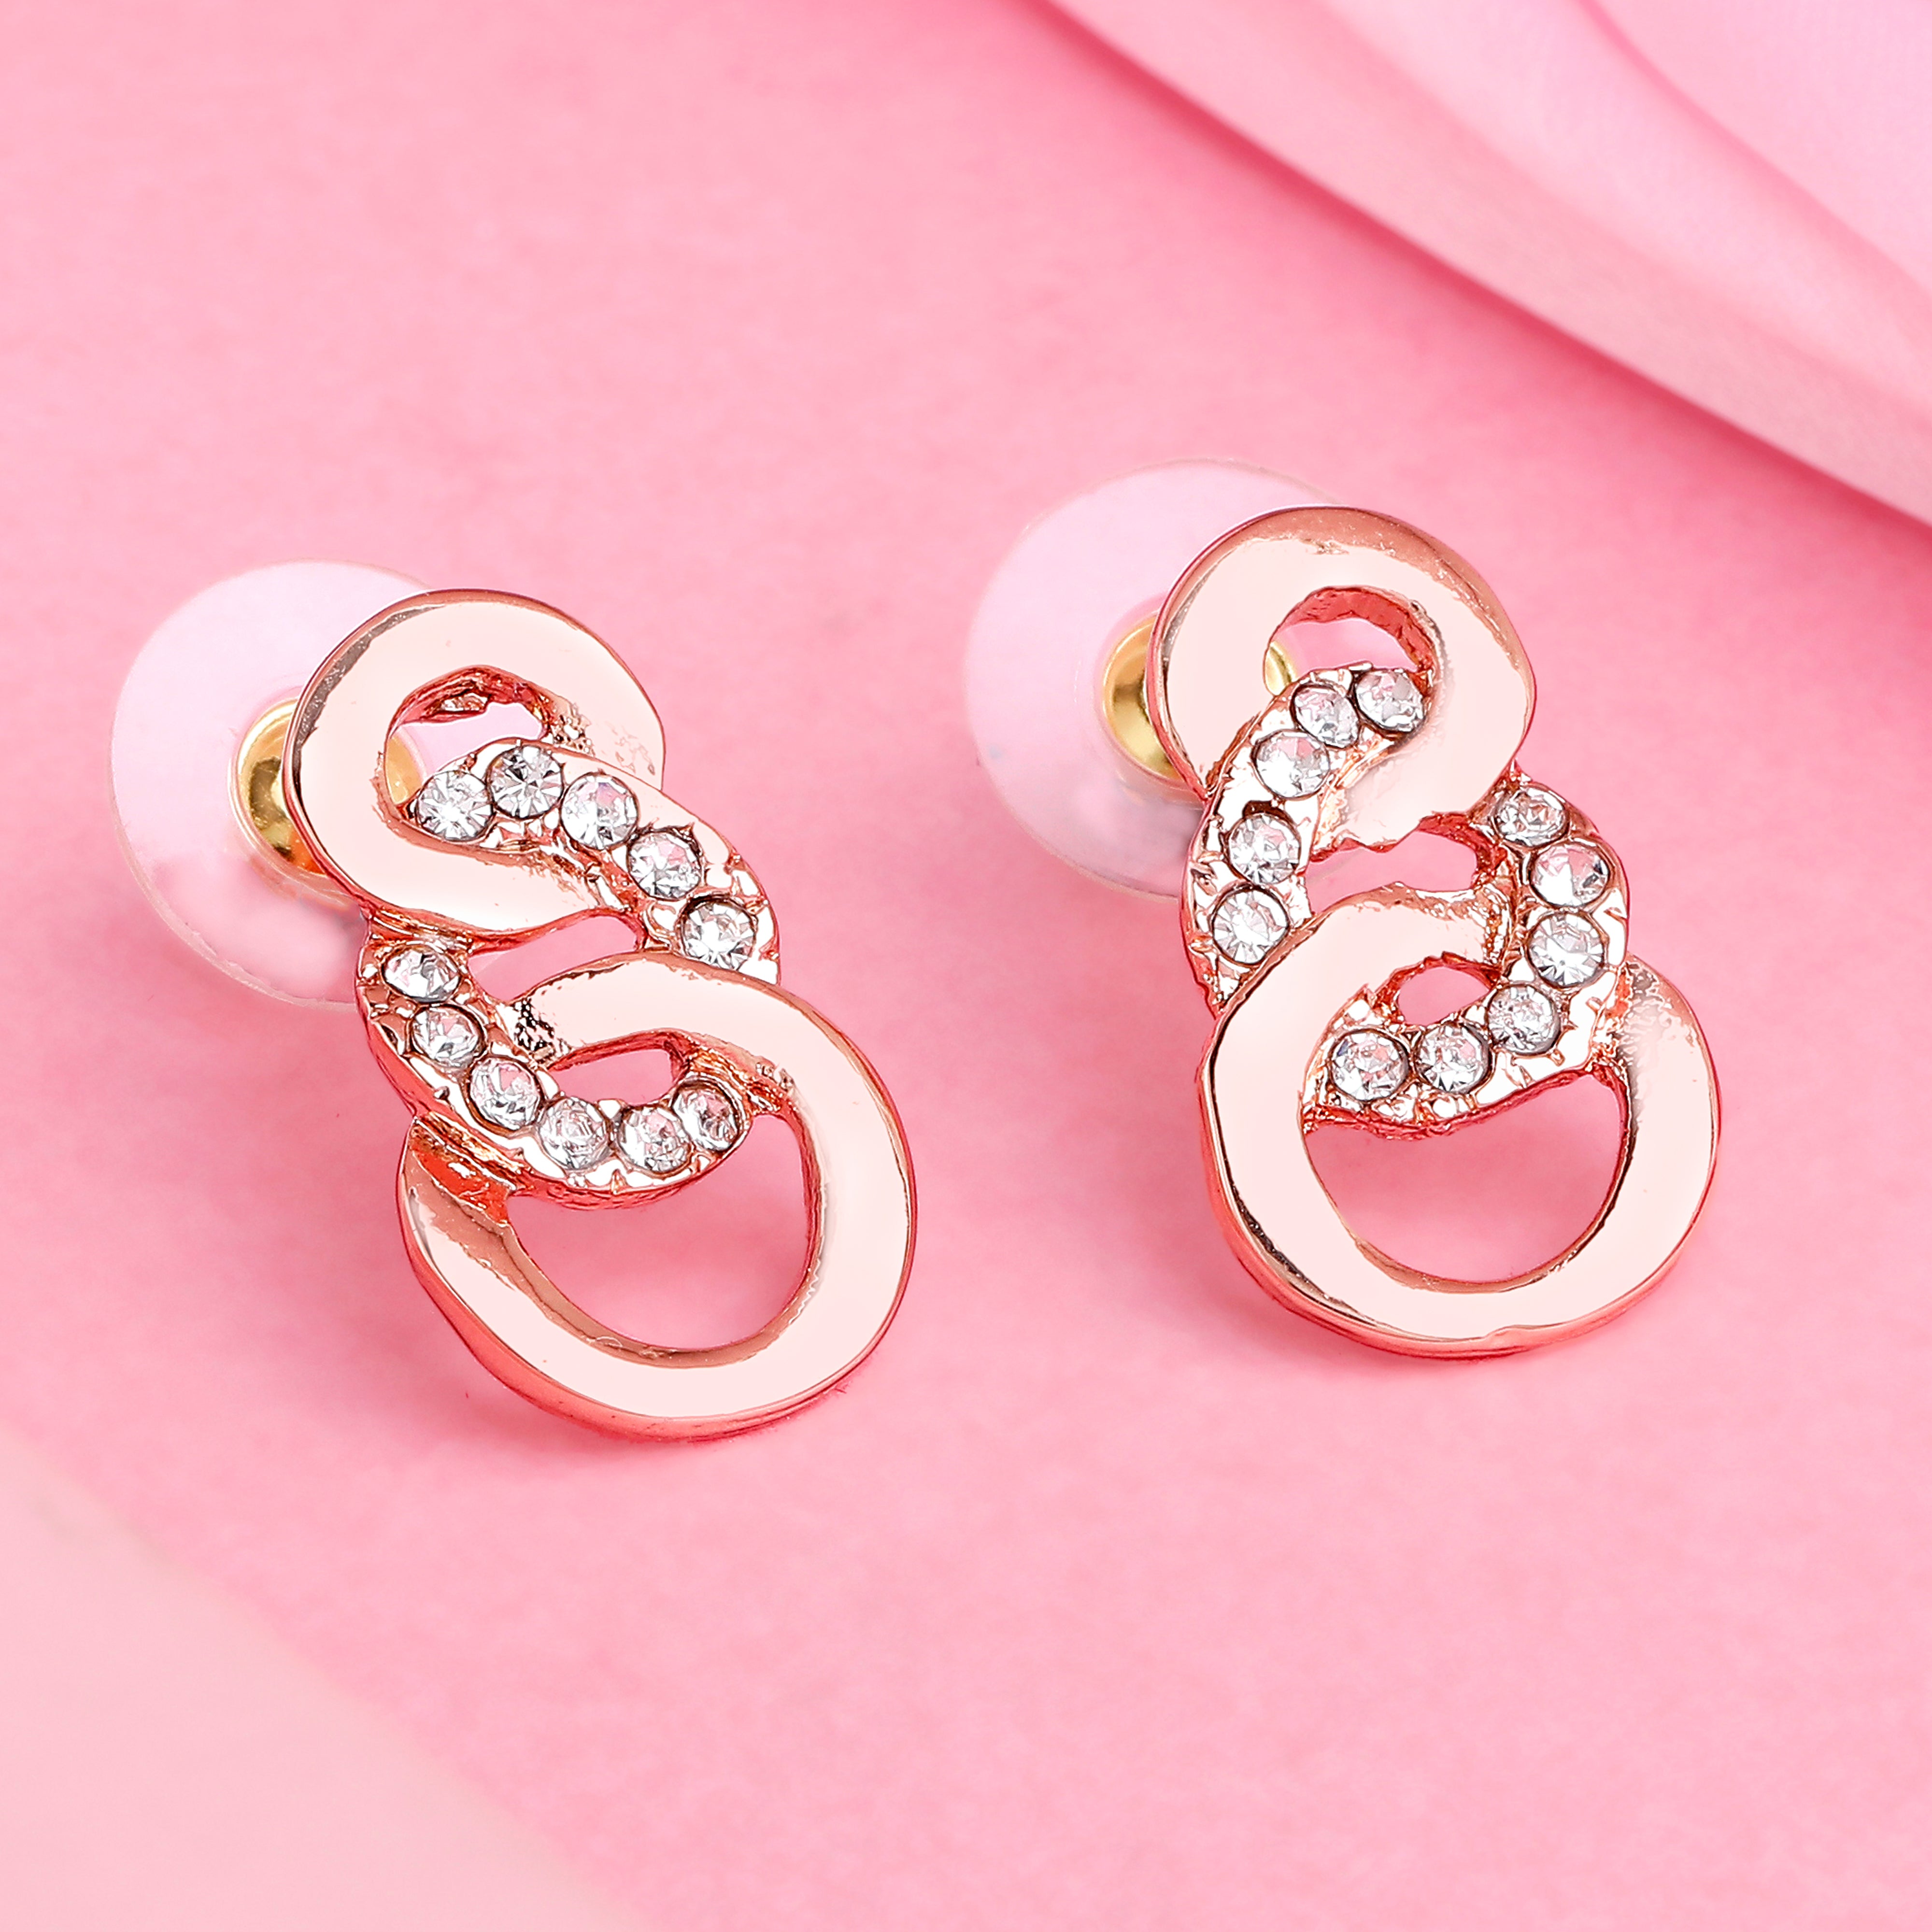 Buy One Gram Gold Earrings Online - [ Premium Quality ]